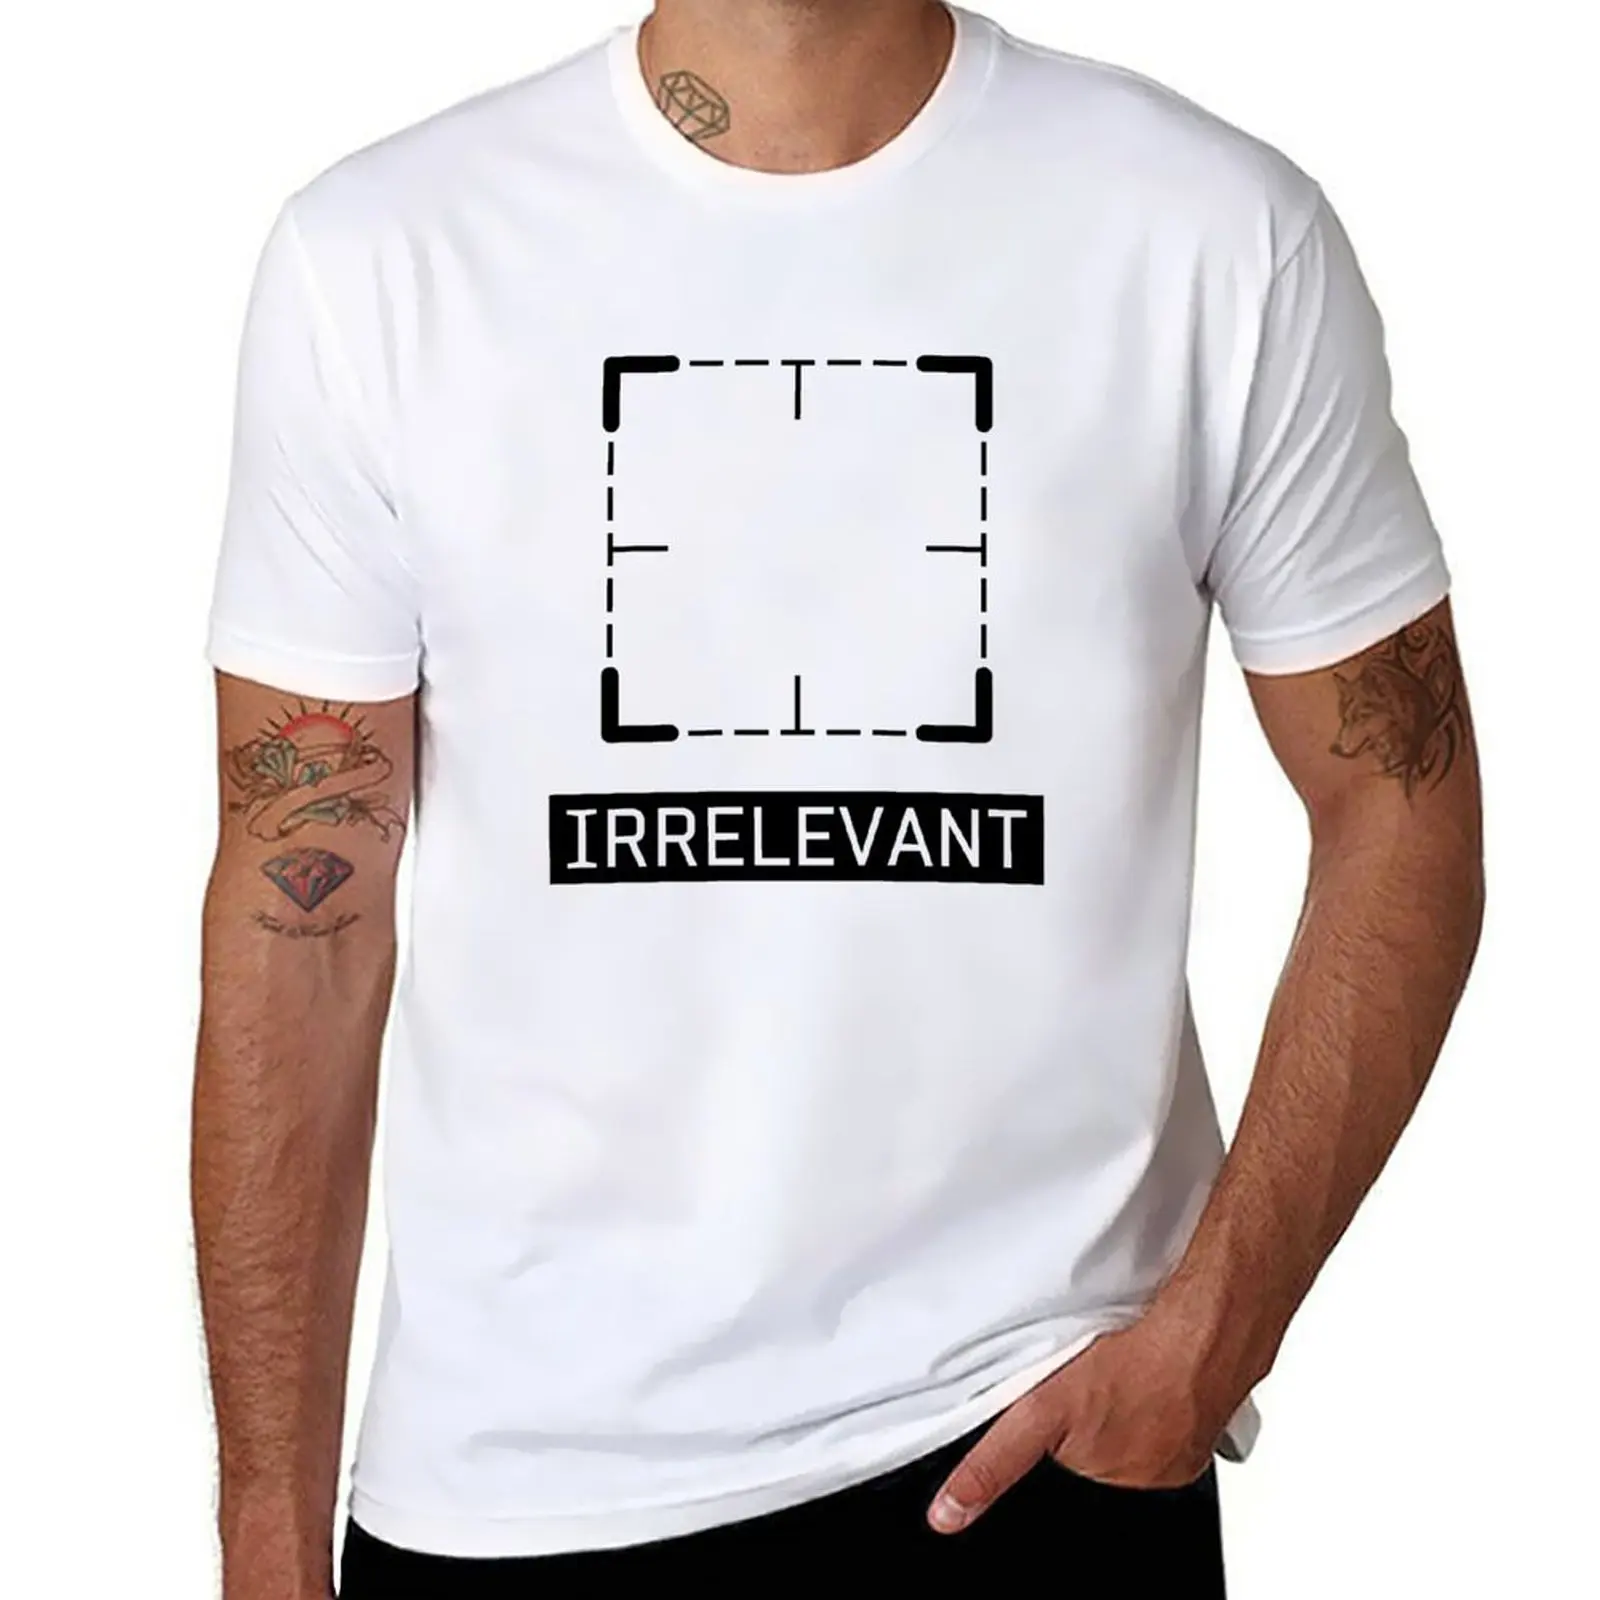 

New Irrelevant - Person of Interest (Black) T-Shirt black t shirts Short t-shirt plus size tops t shirts for men graphic